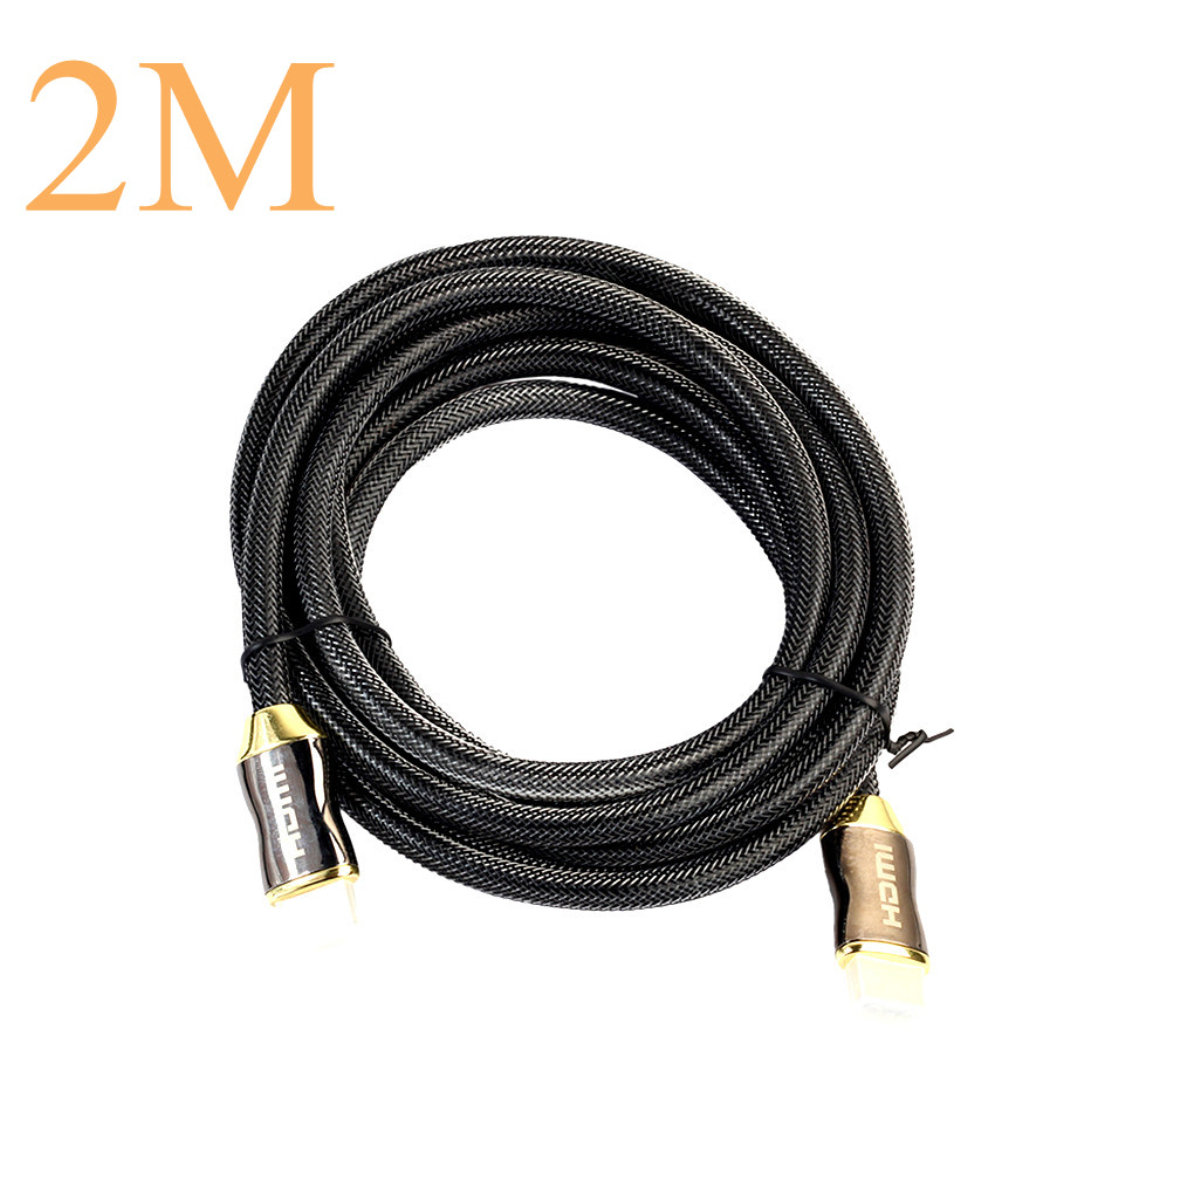 HDMI 2.0 Cable (17)